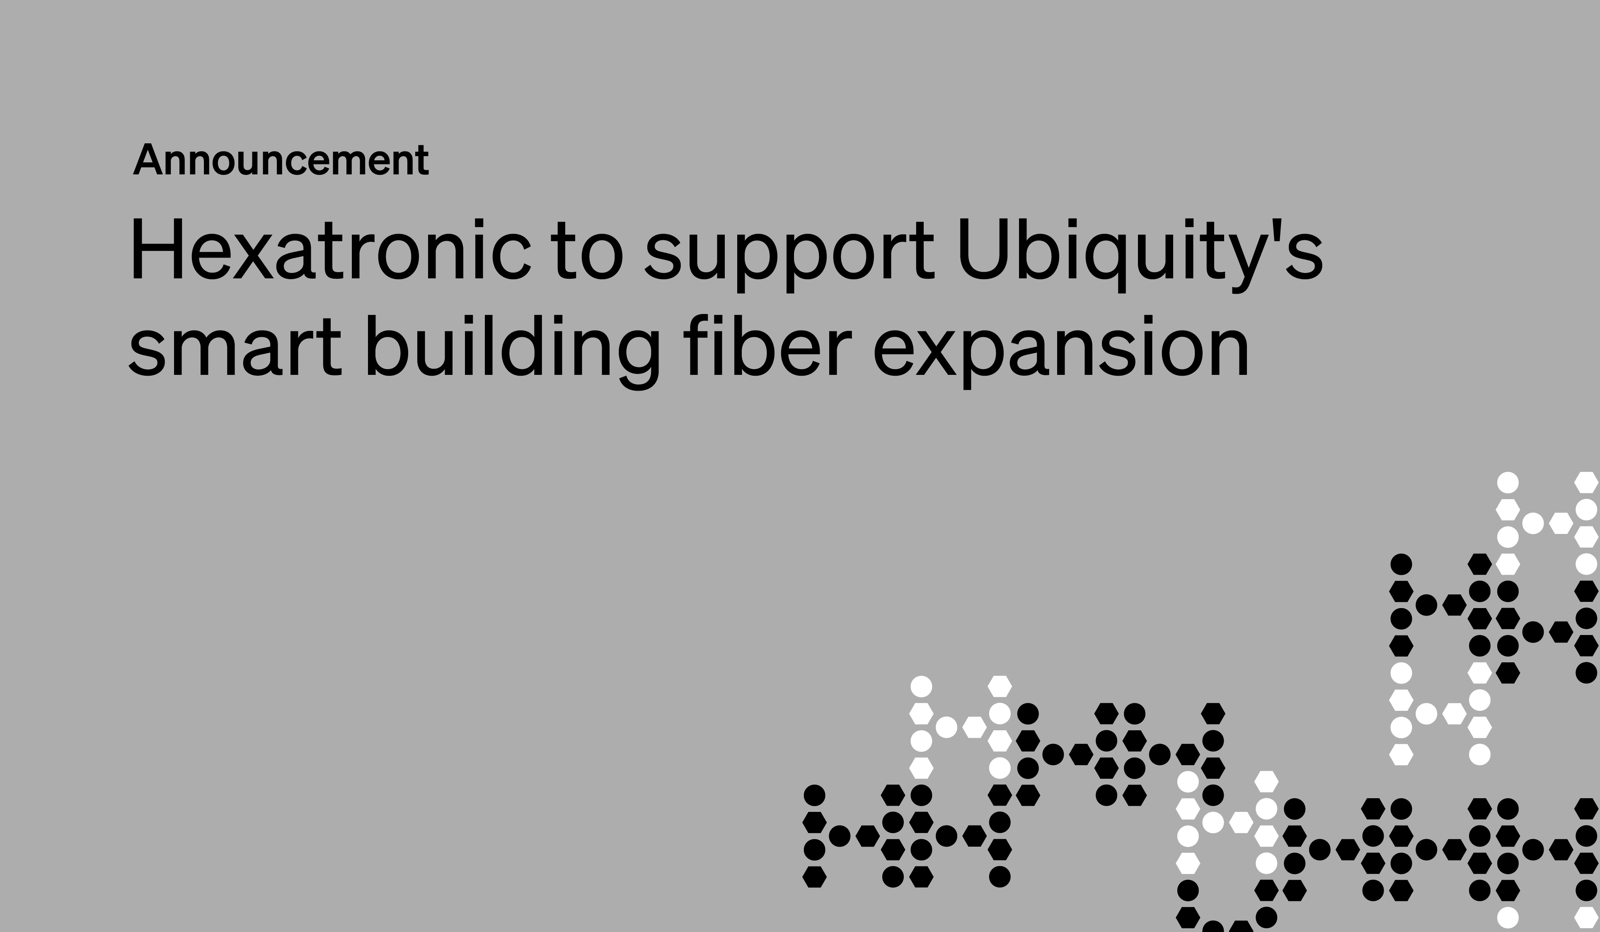 Hexatronic to support Ubiquity’s smart building fiber expansion